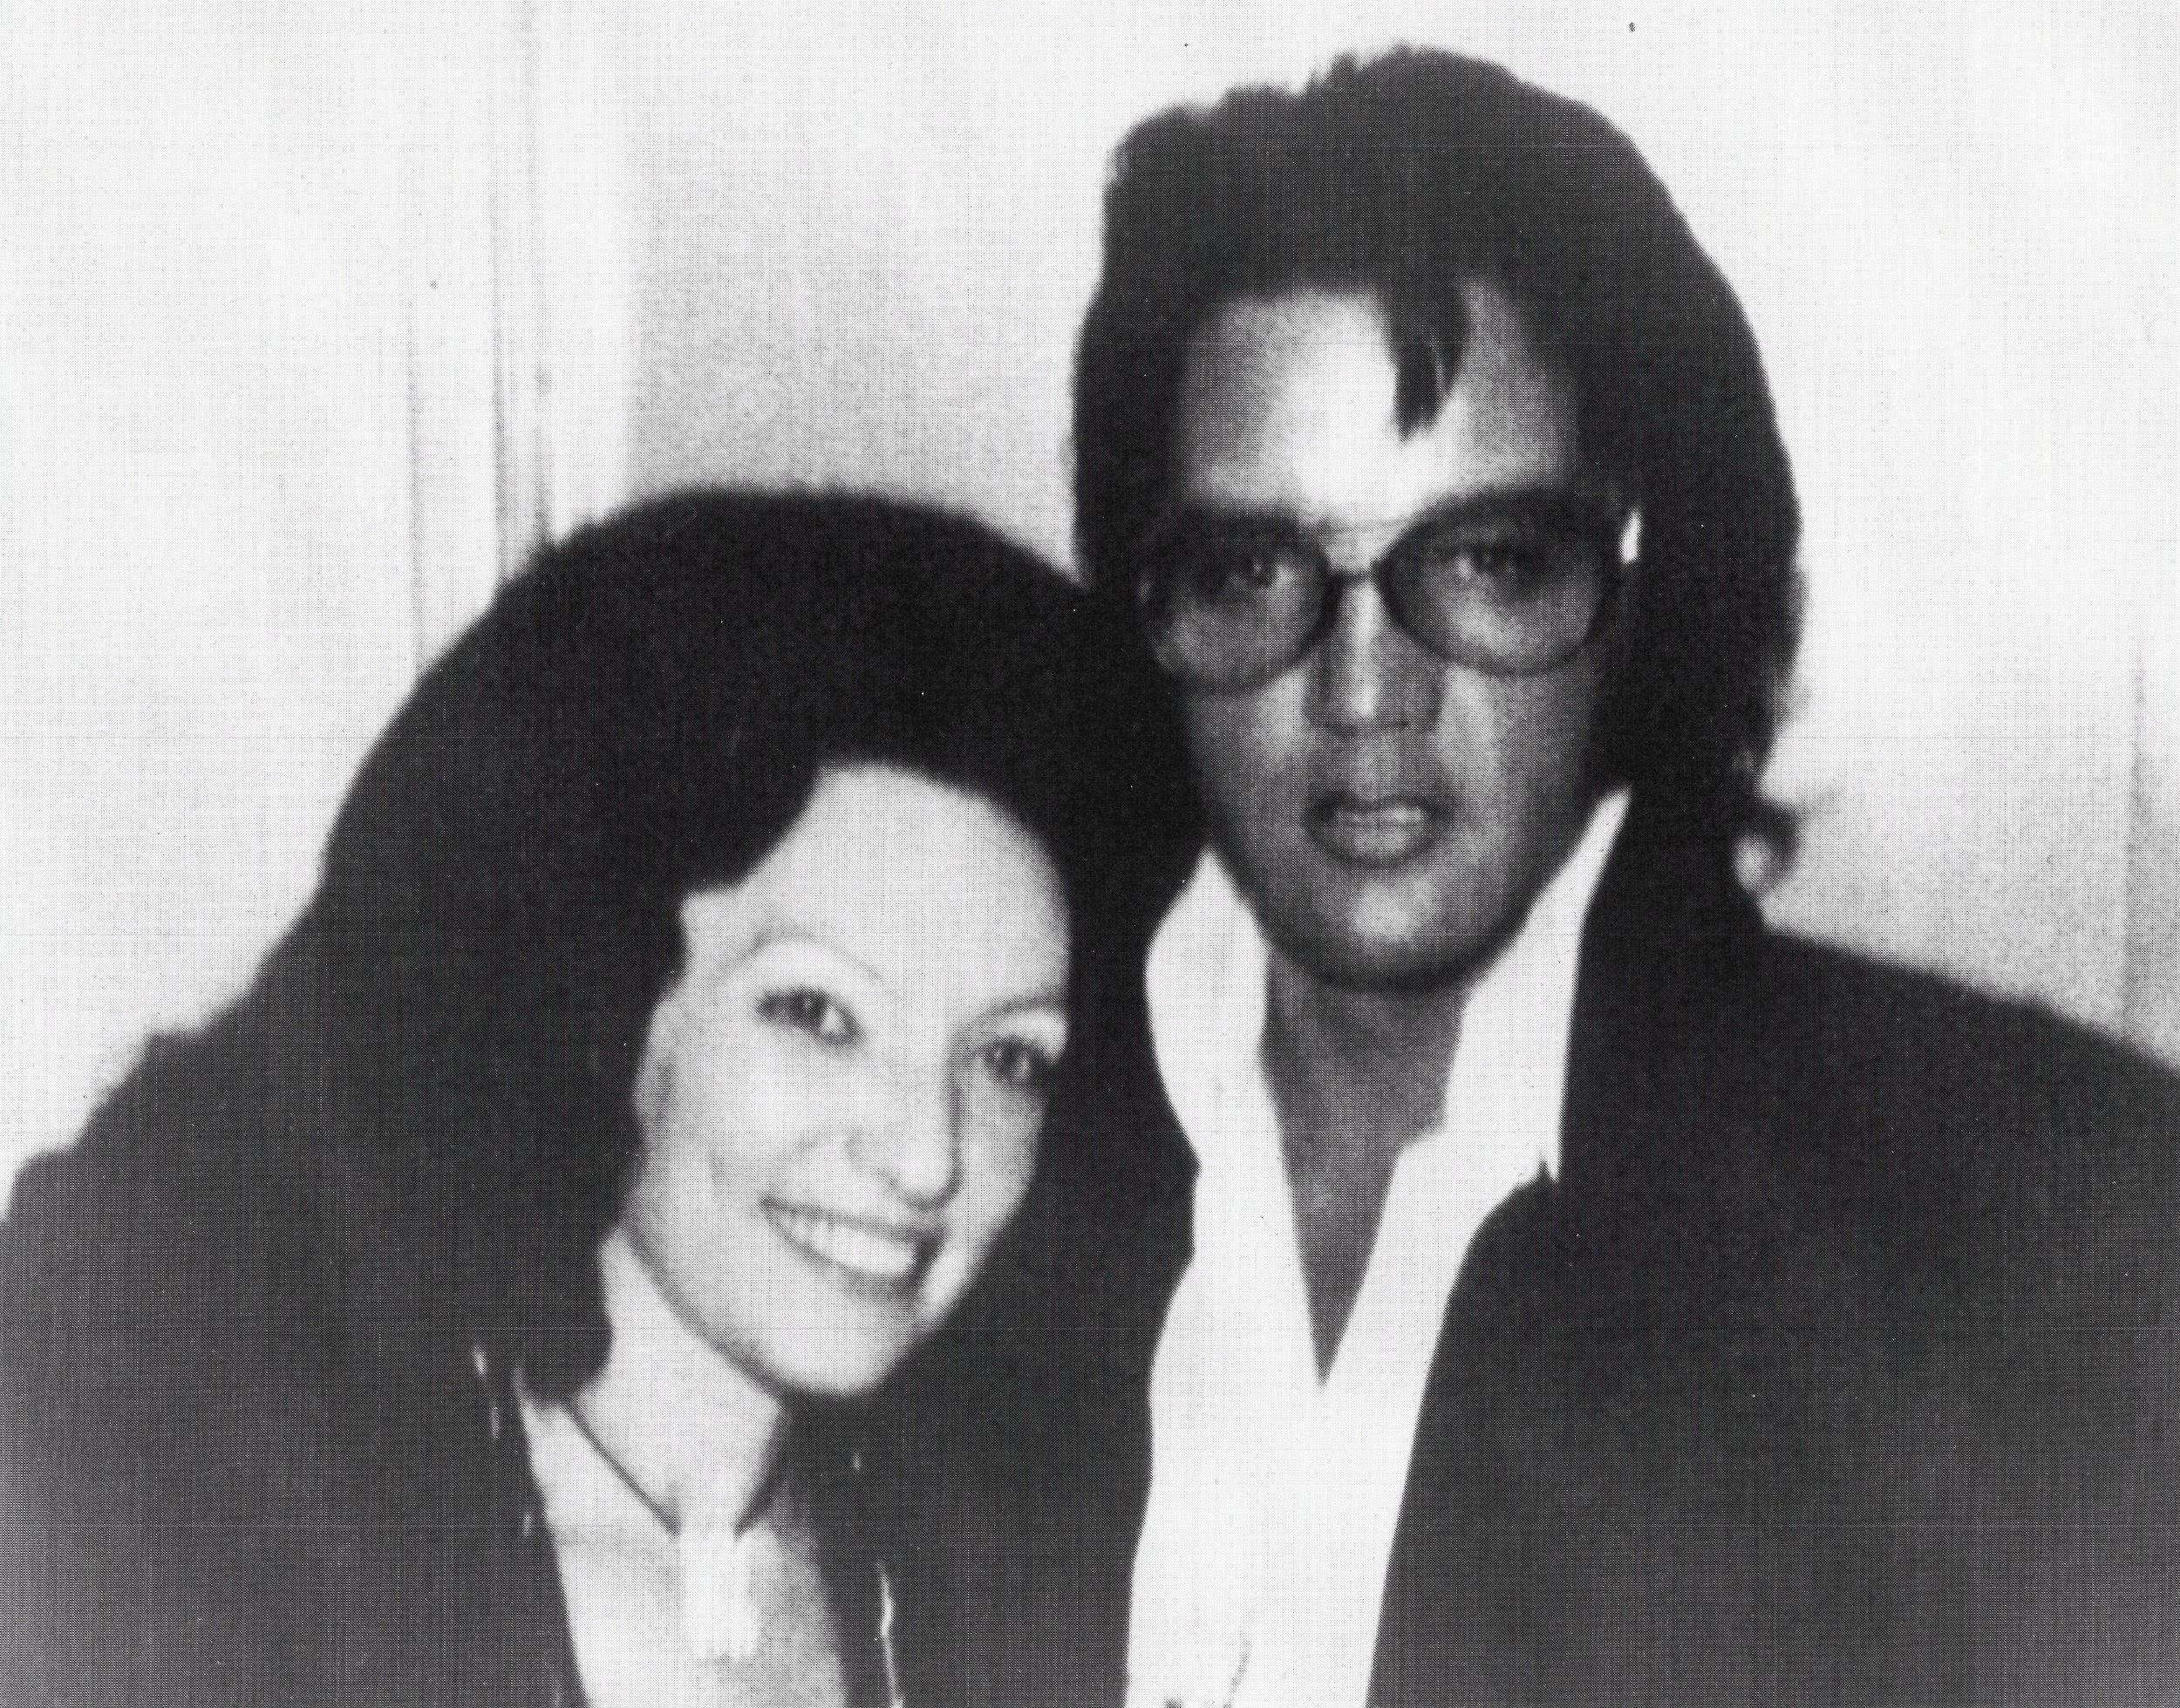  Dottie and Elvis 1970s 